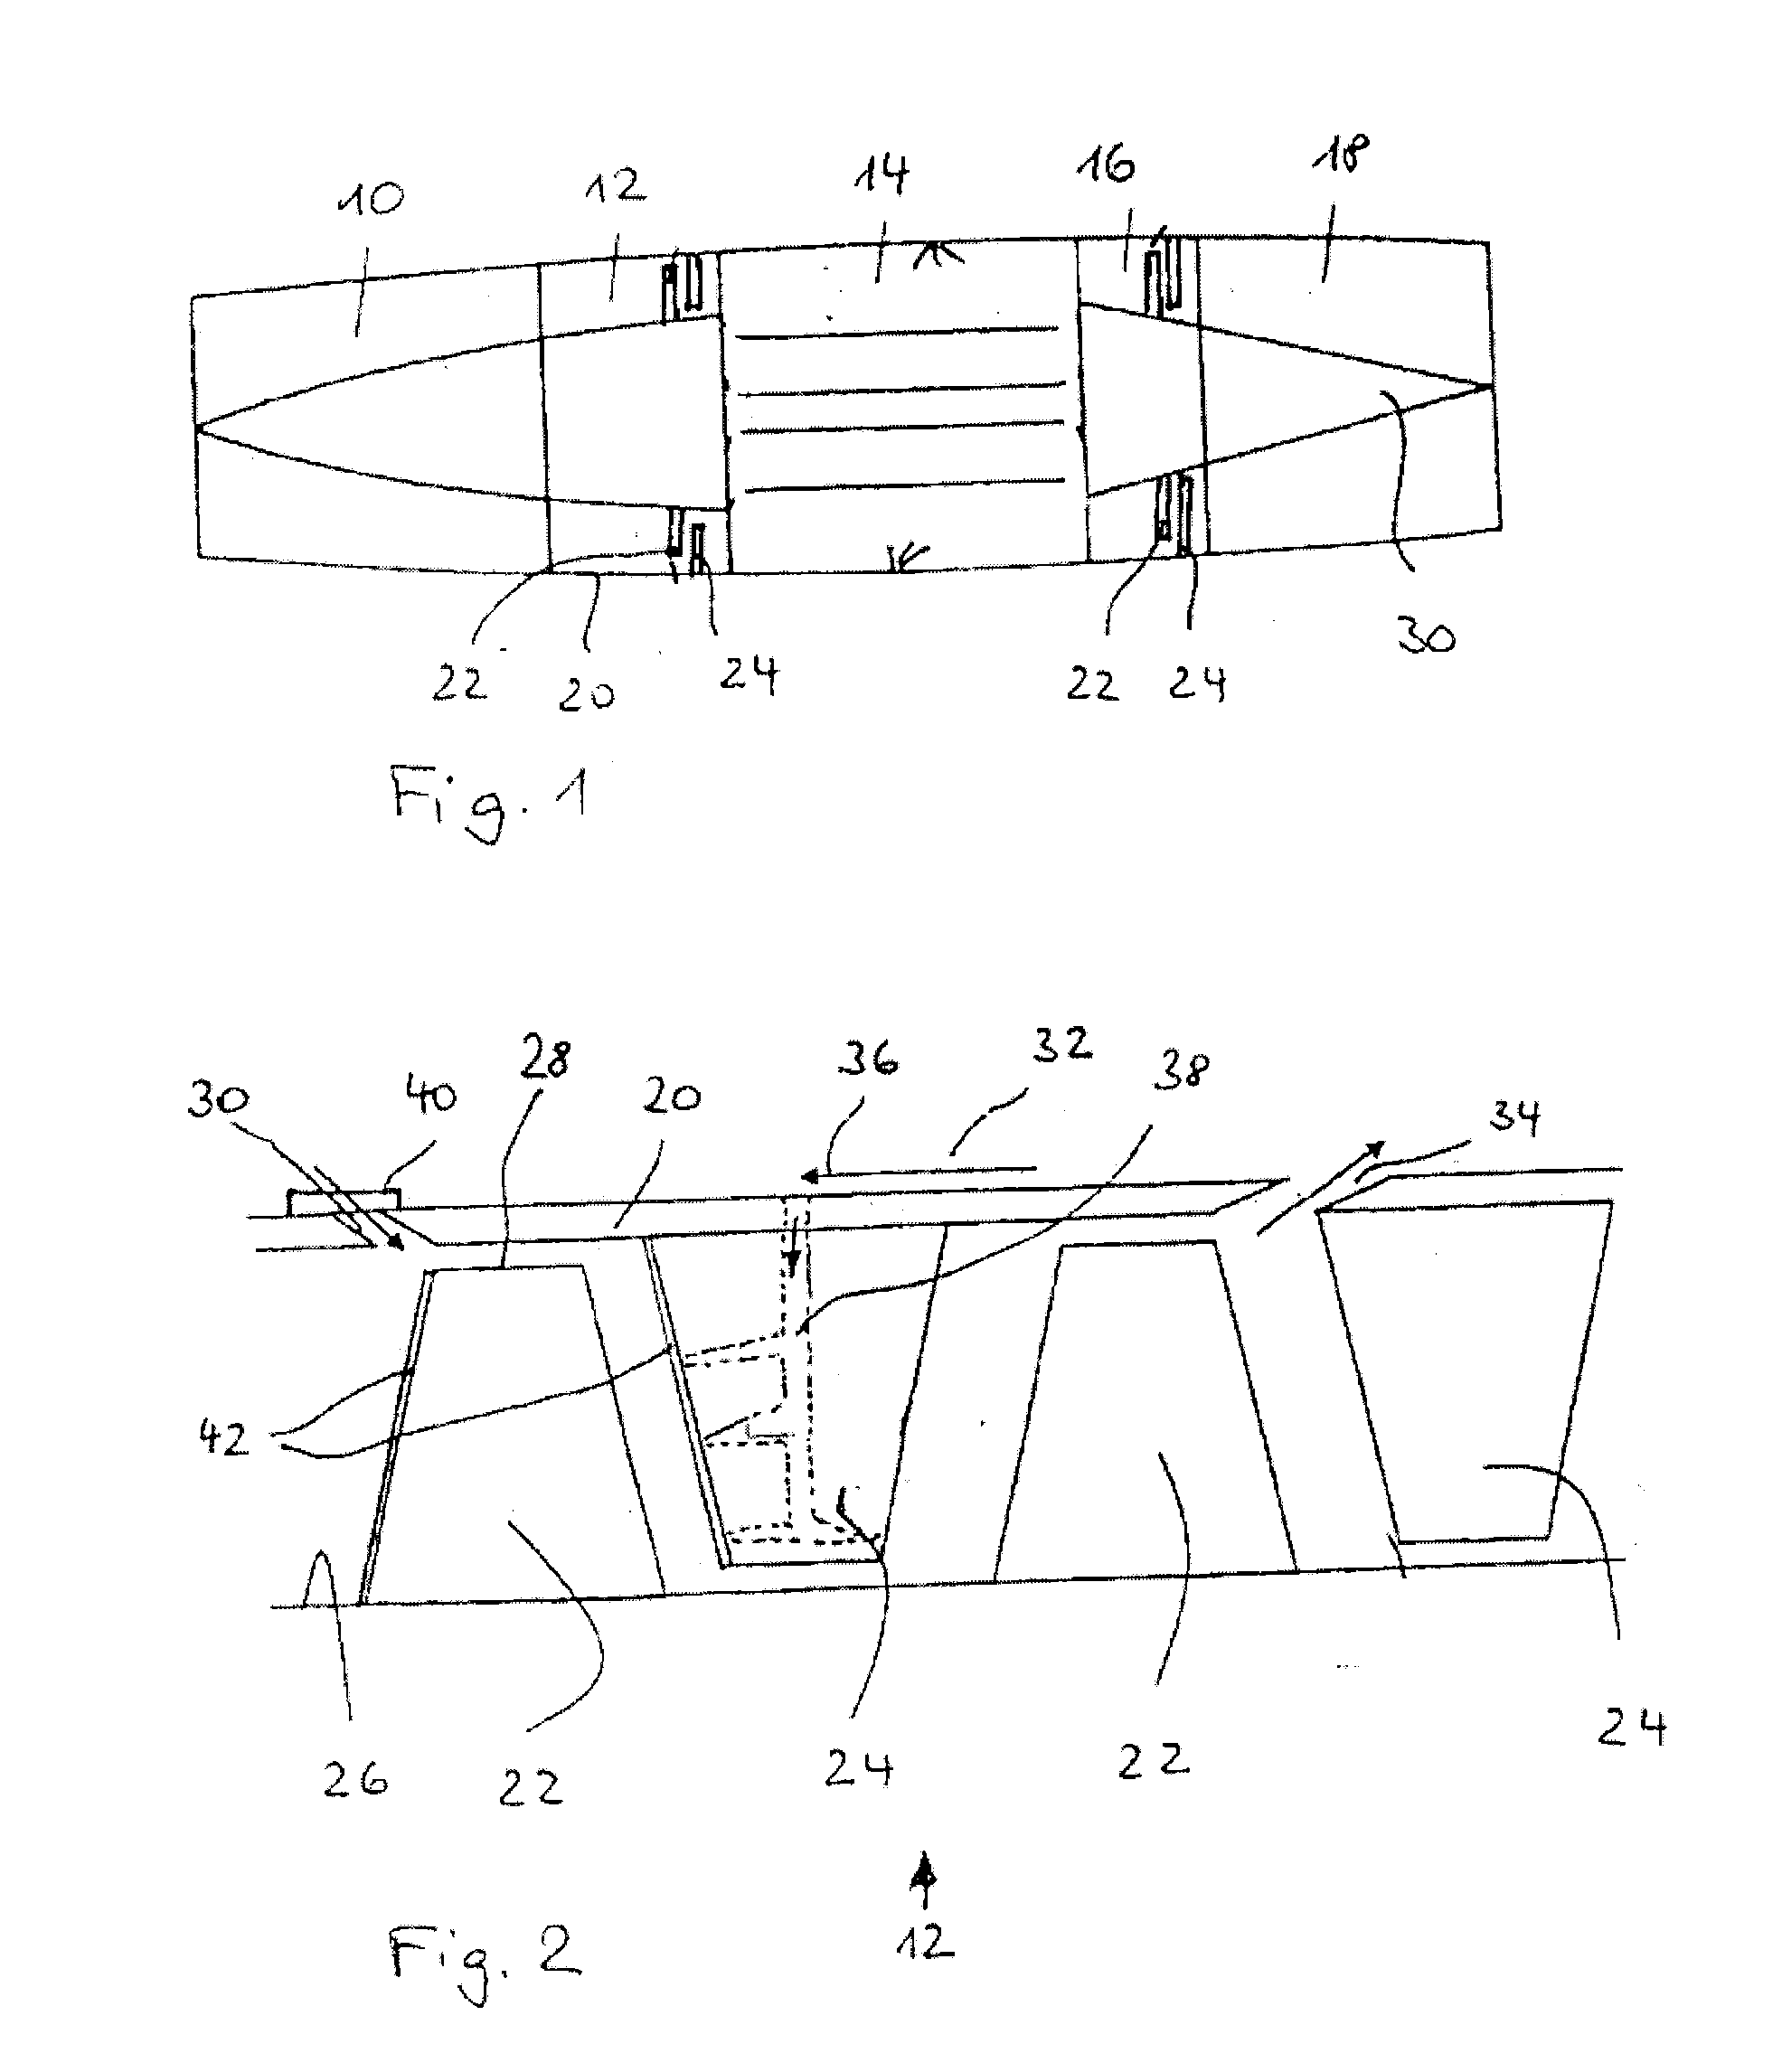 Gas turbine and method for varying the aerodynamic shape of a gas turbine blade